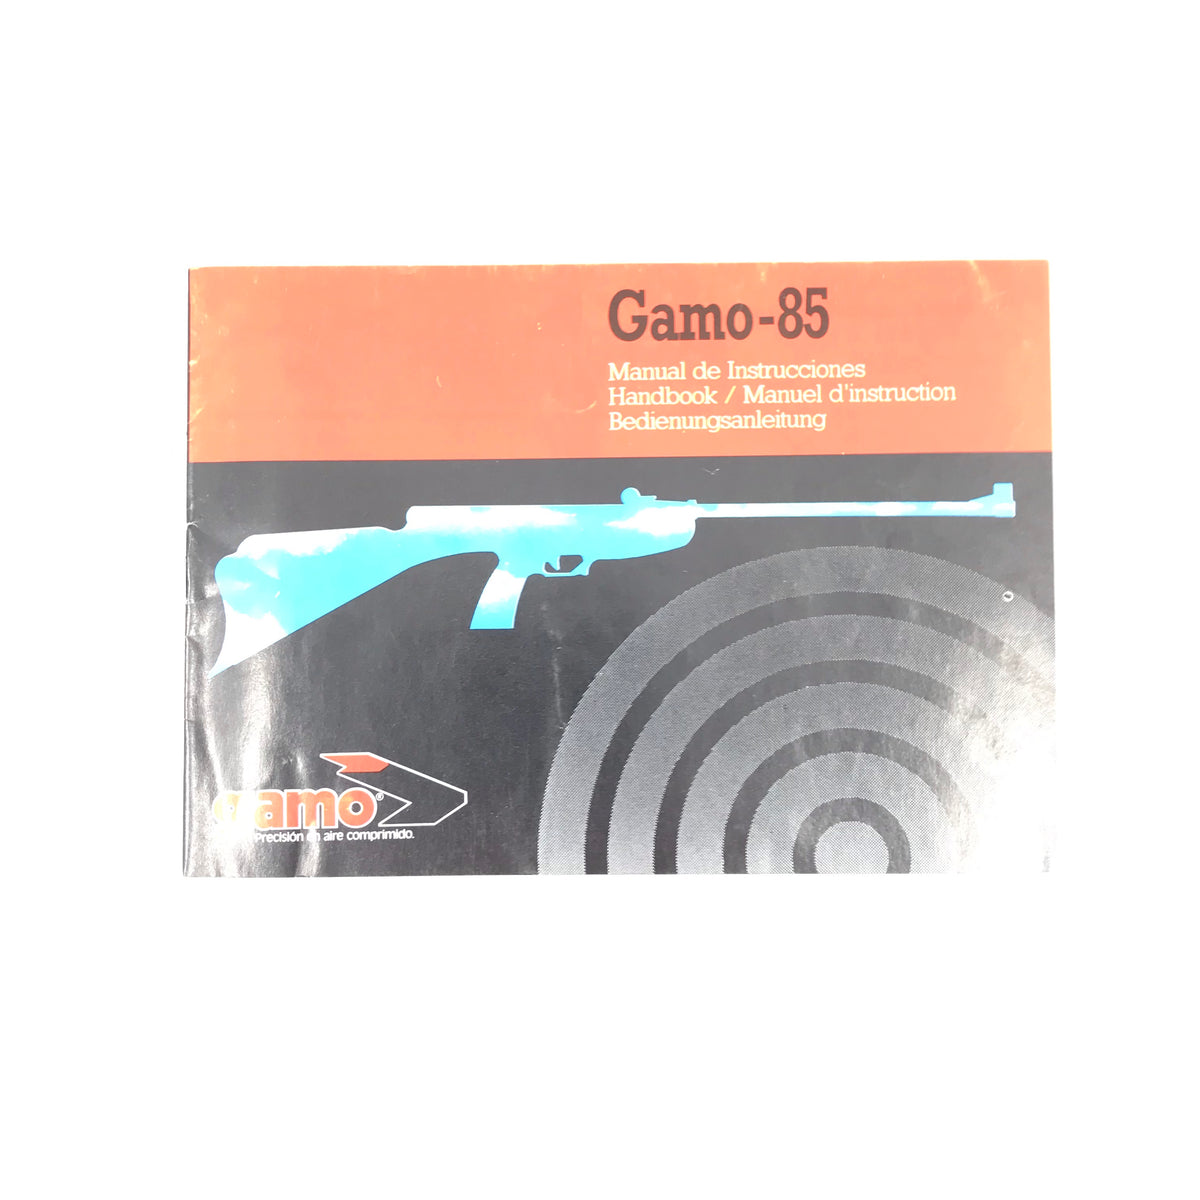 Gamo-85 Instruction Manual (1985)